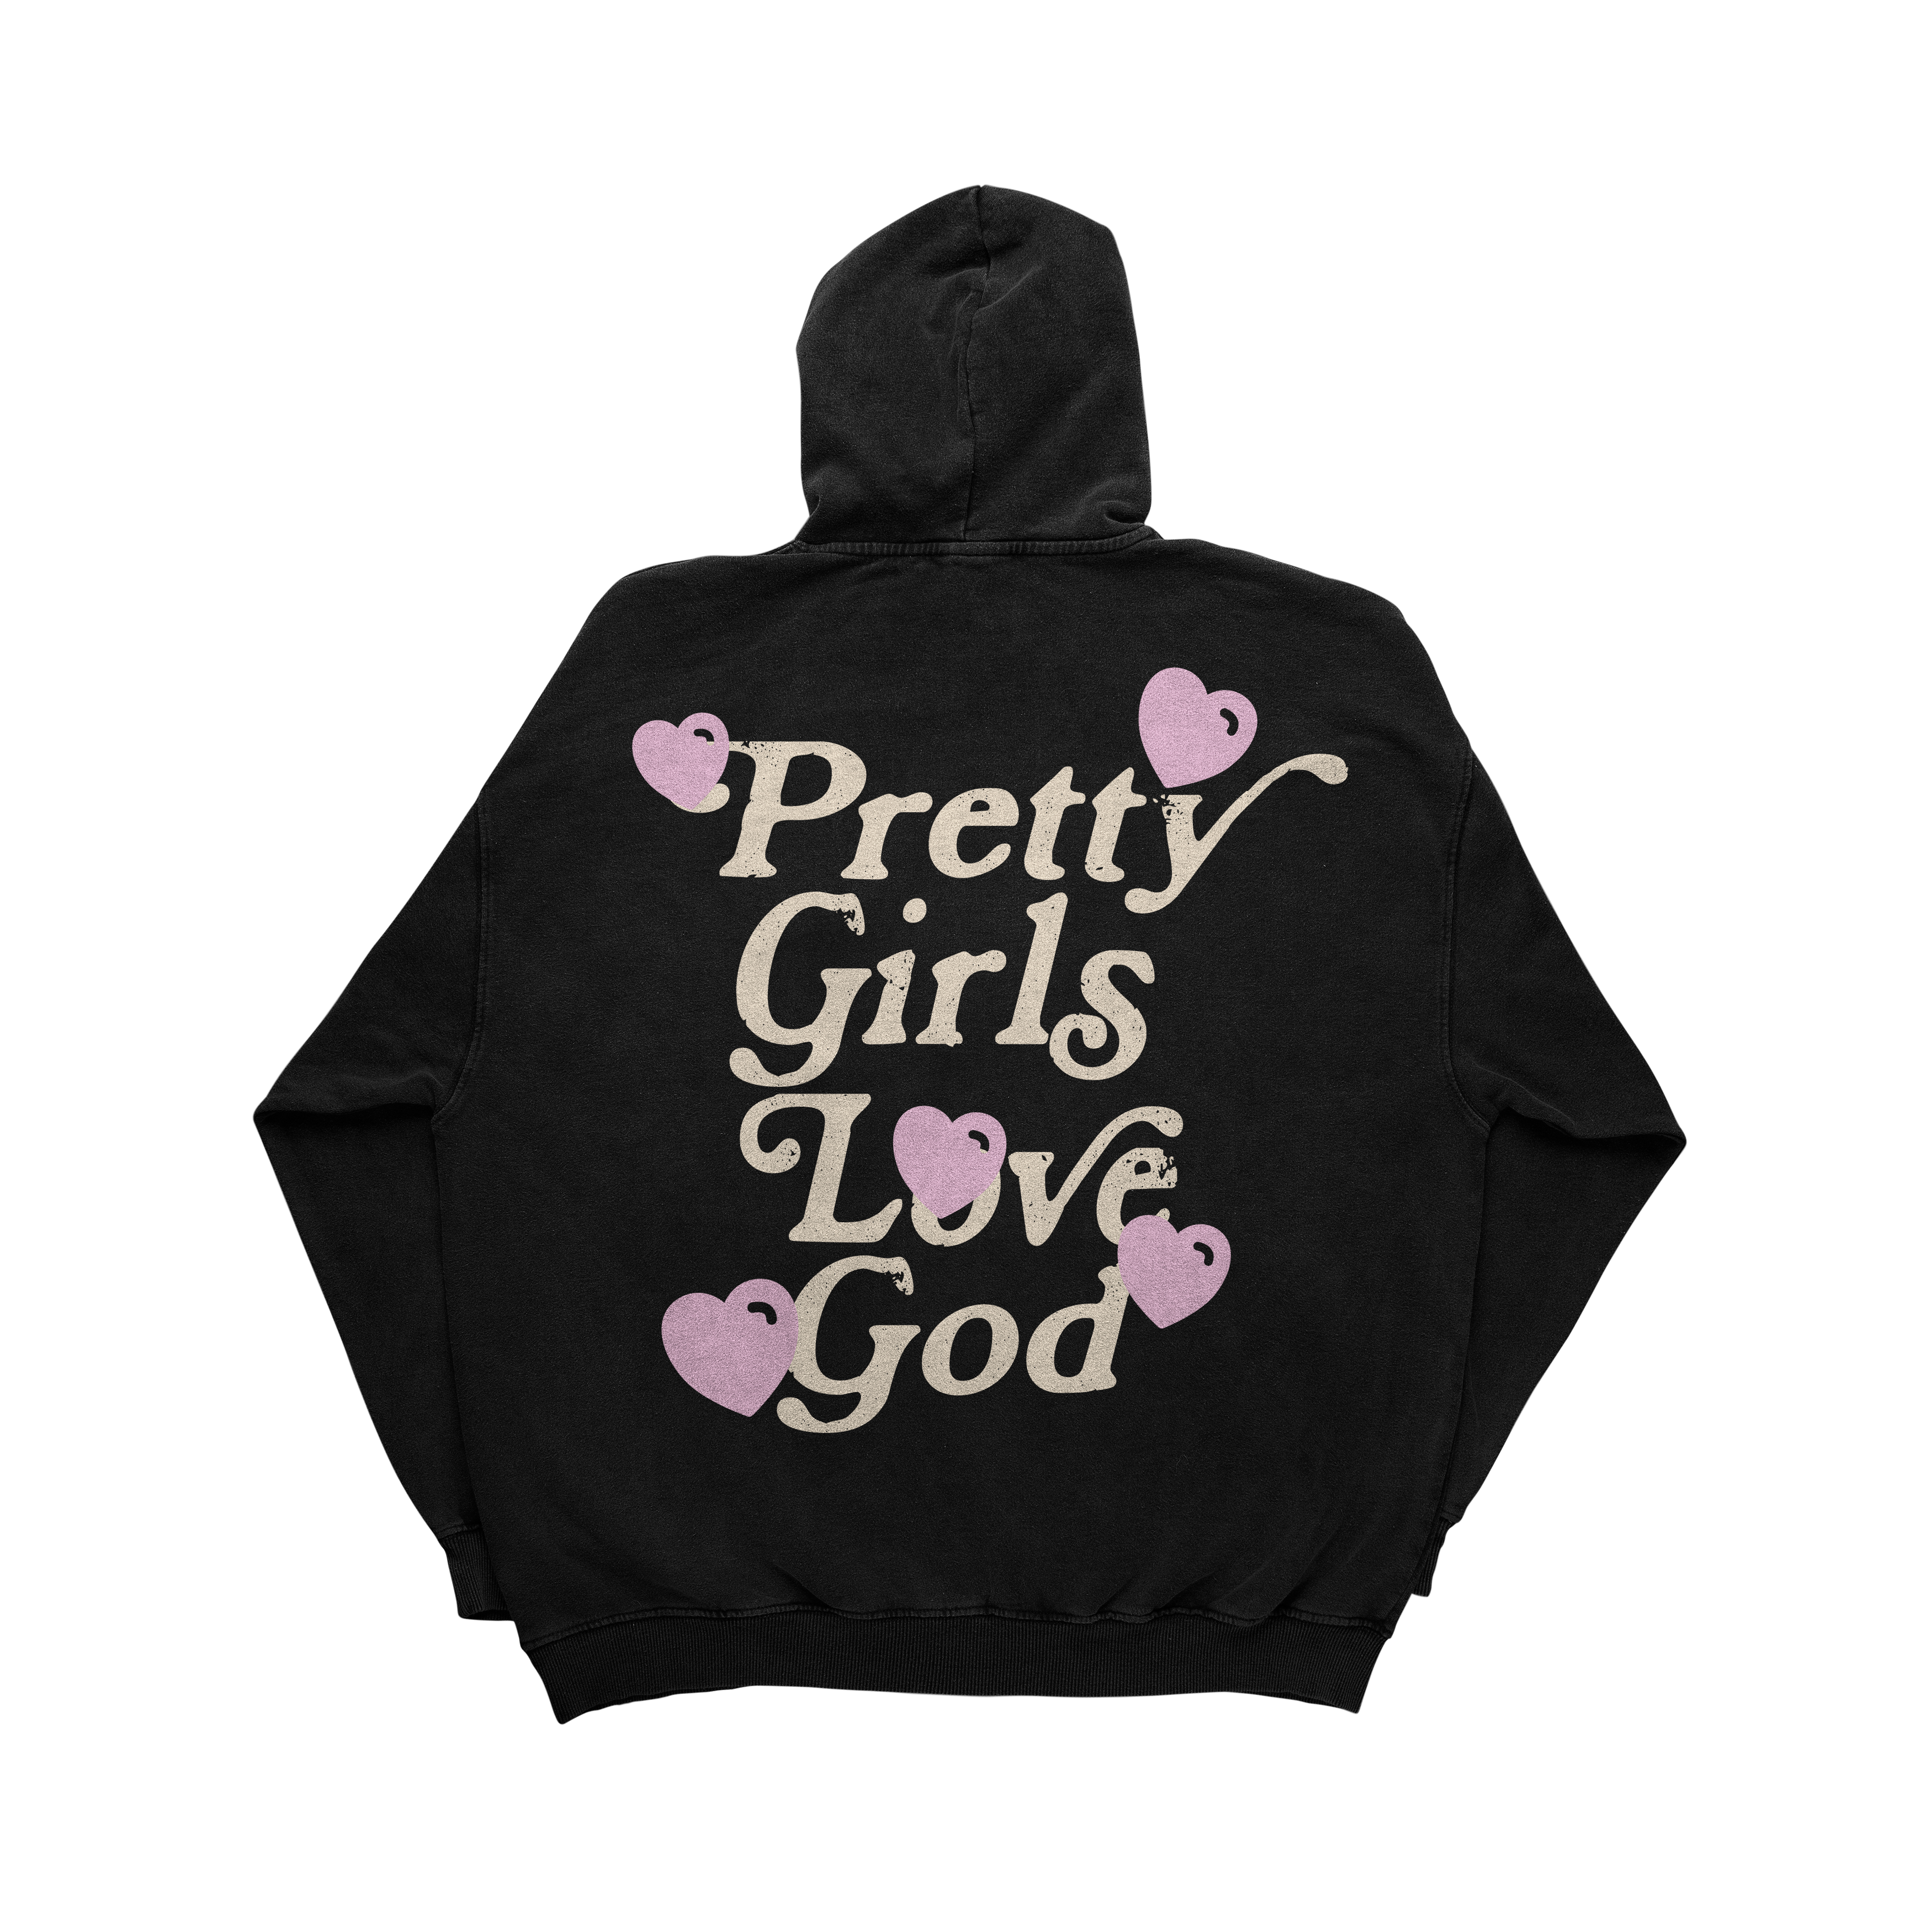 "PRETTY GIRLS LOVE GOD" HOODIE